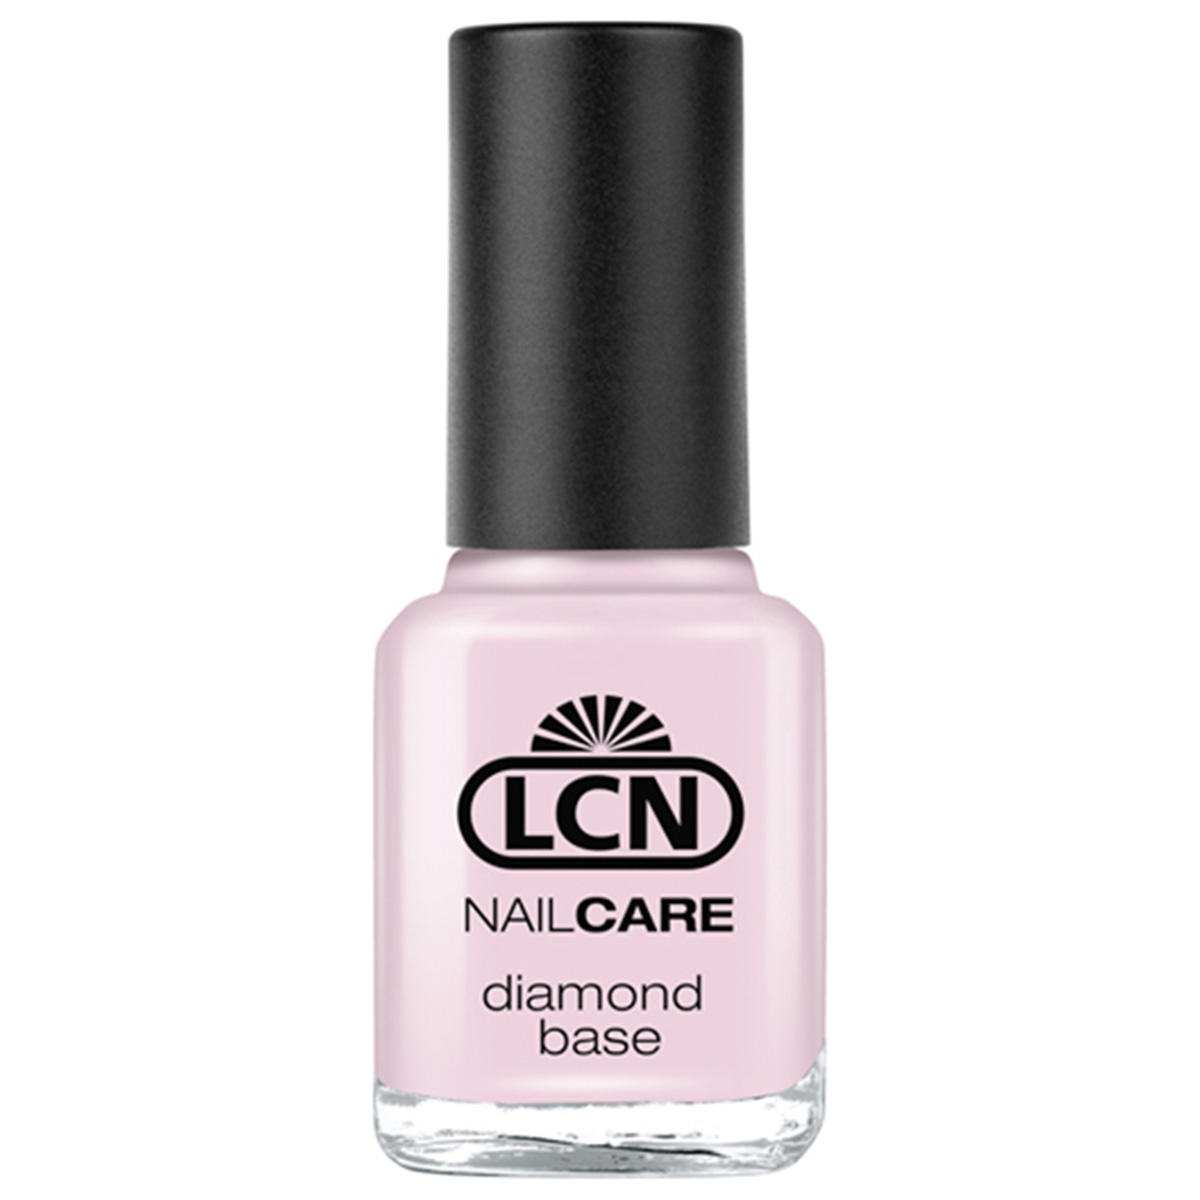 LCN Diamond Base Pink, Inhalt 8 ml